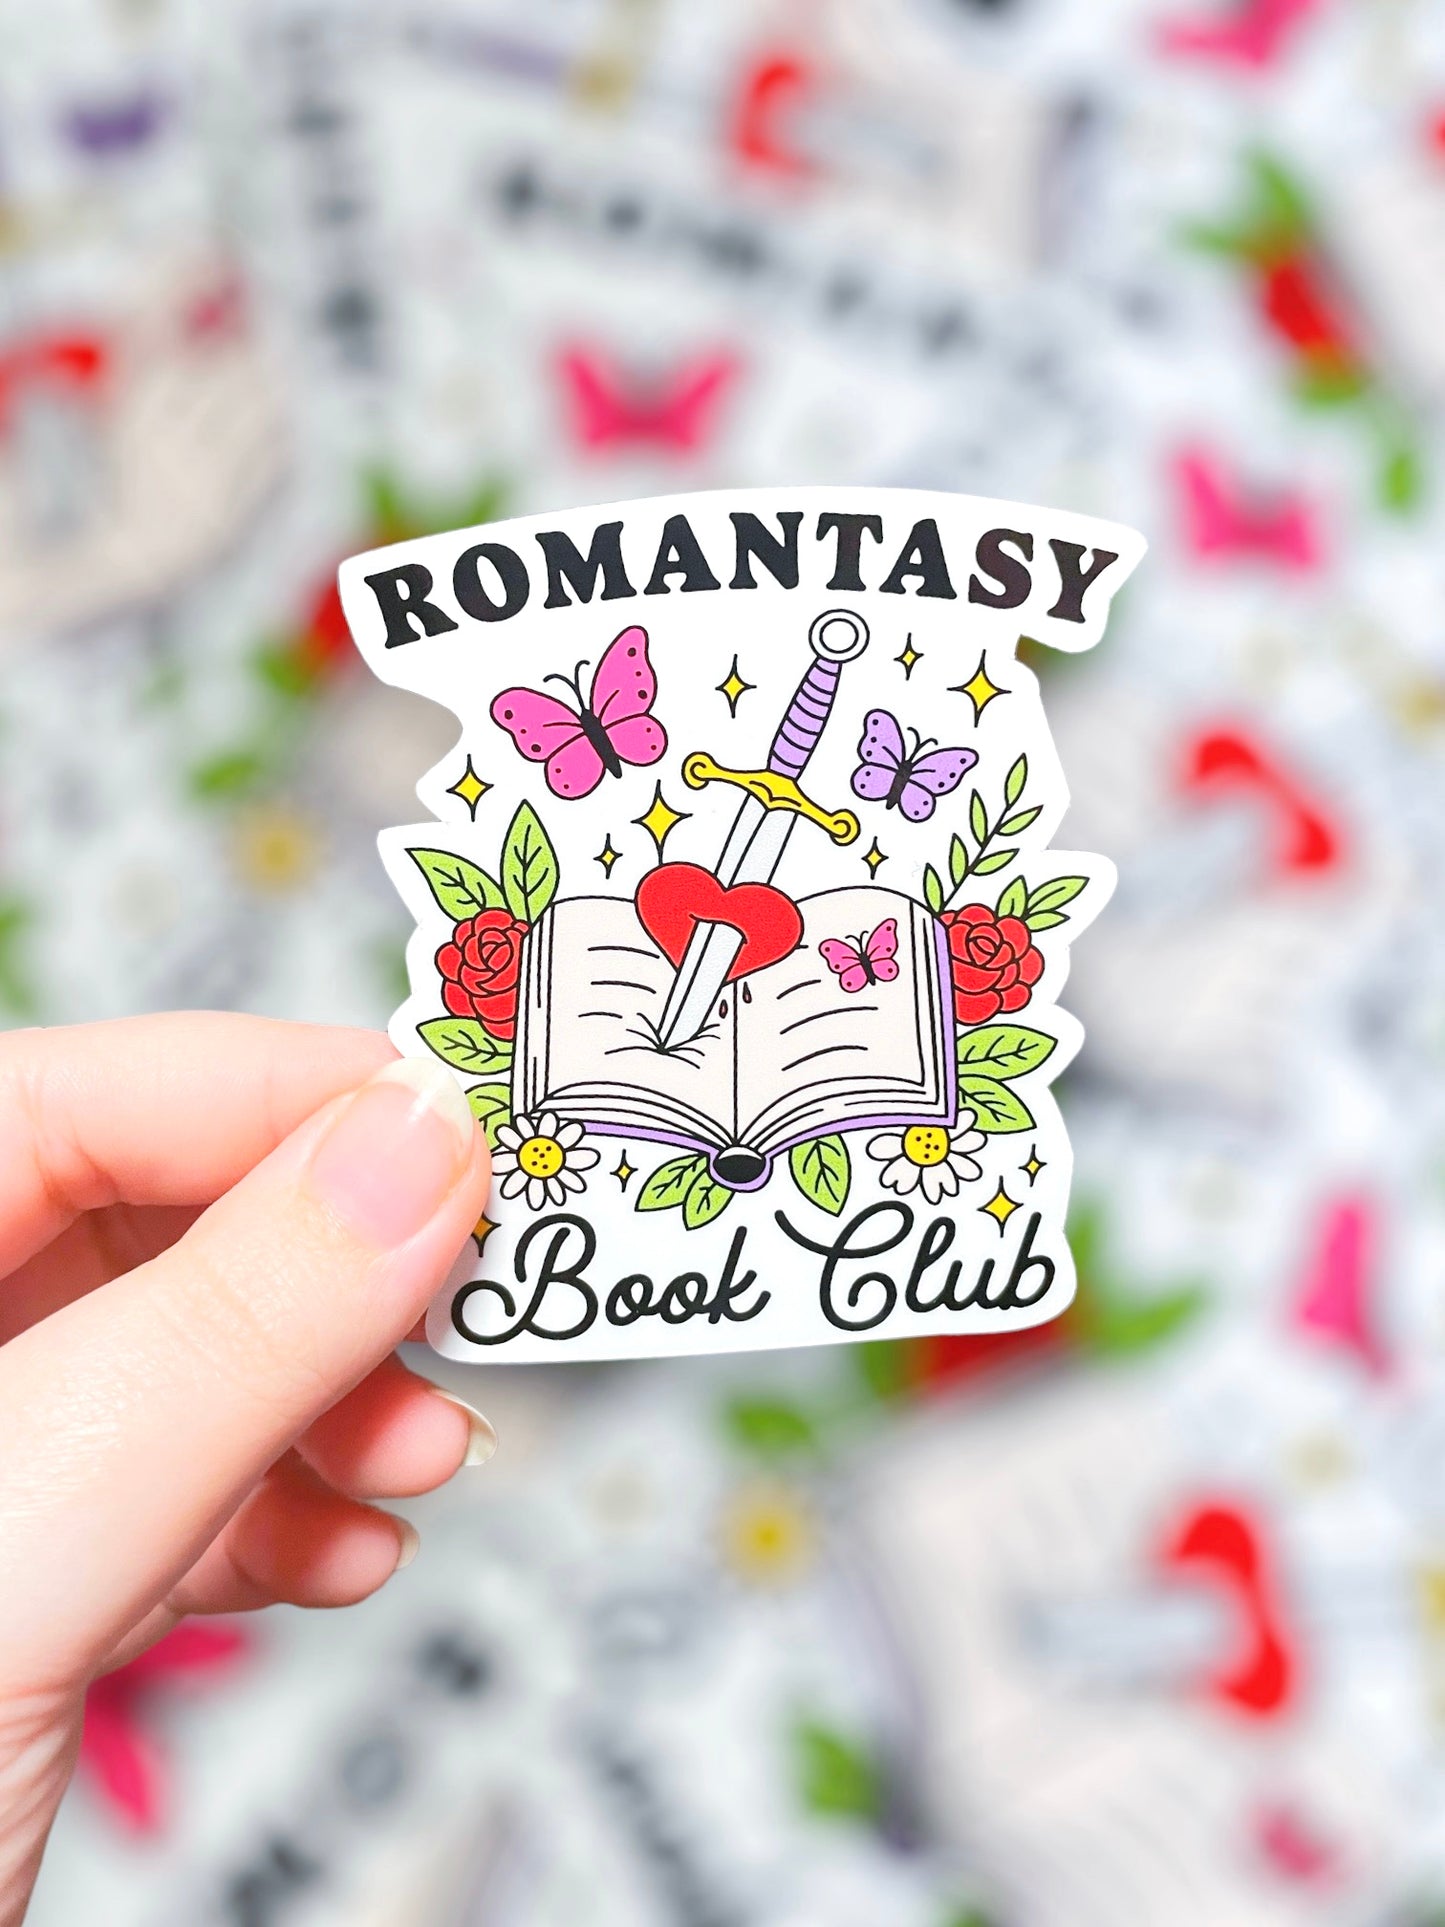 Romantasy Book Club, Vinyl Sticker